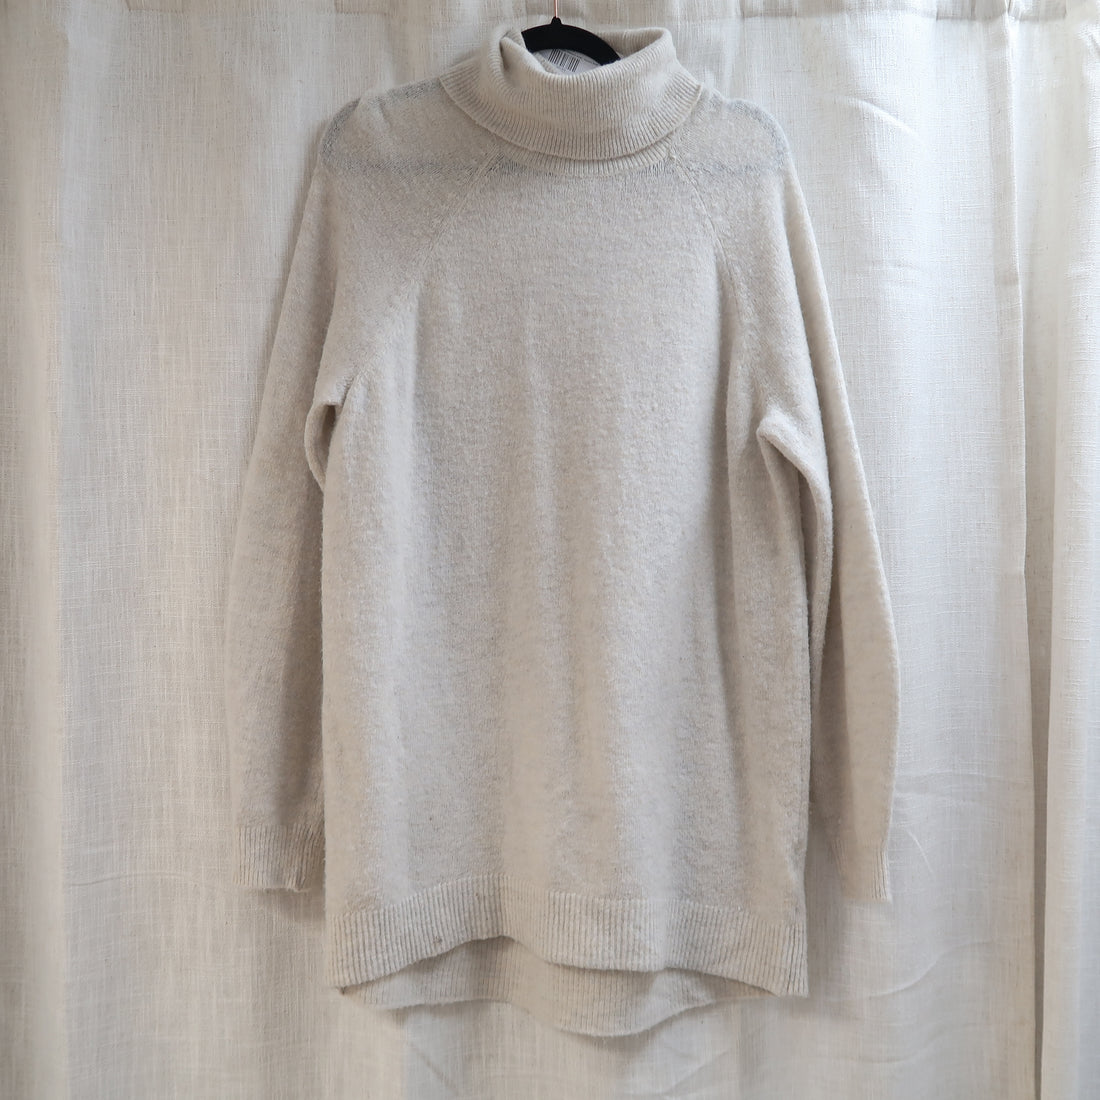 H&amp;M - Sweater (Women&